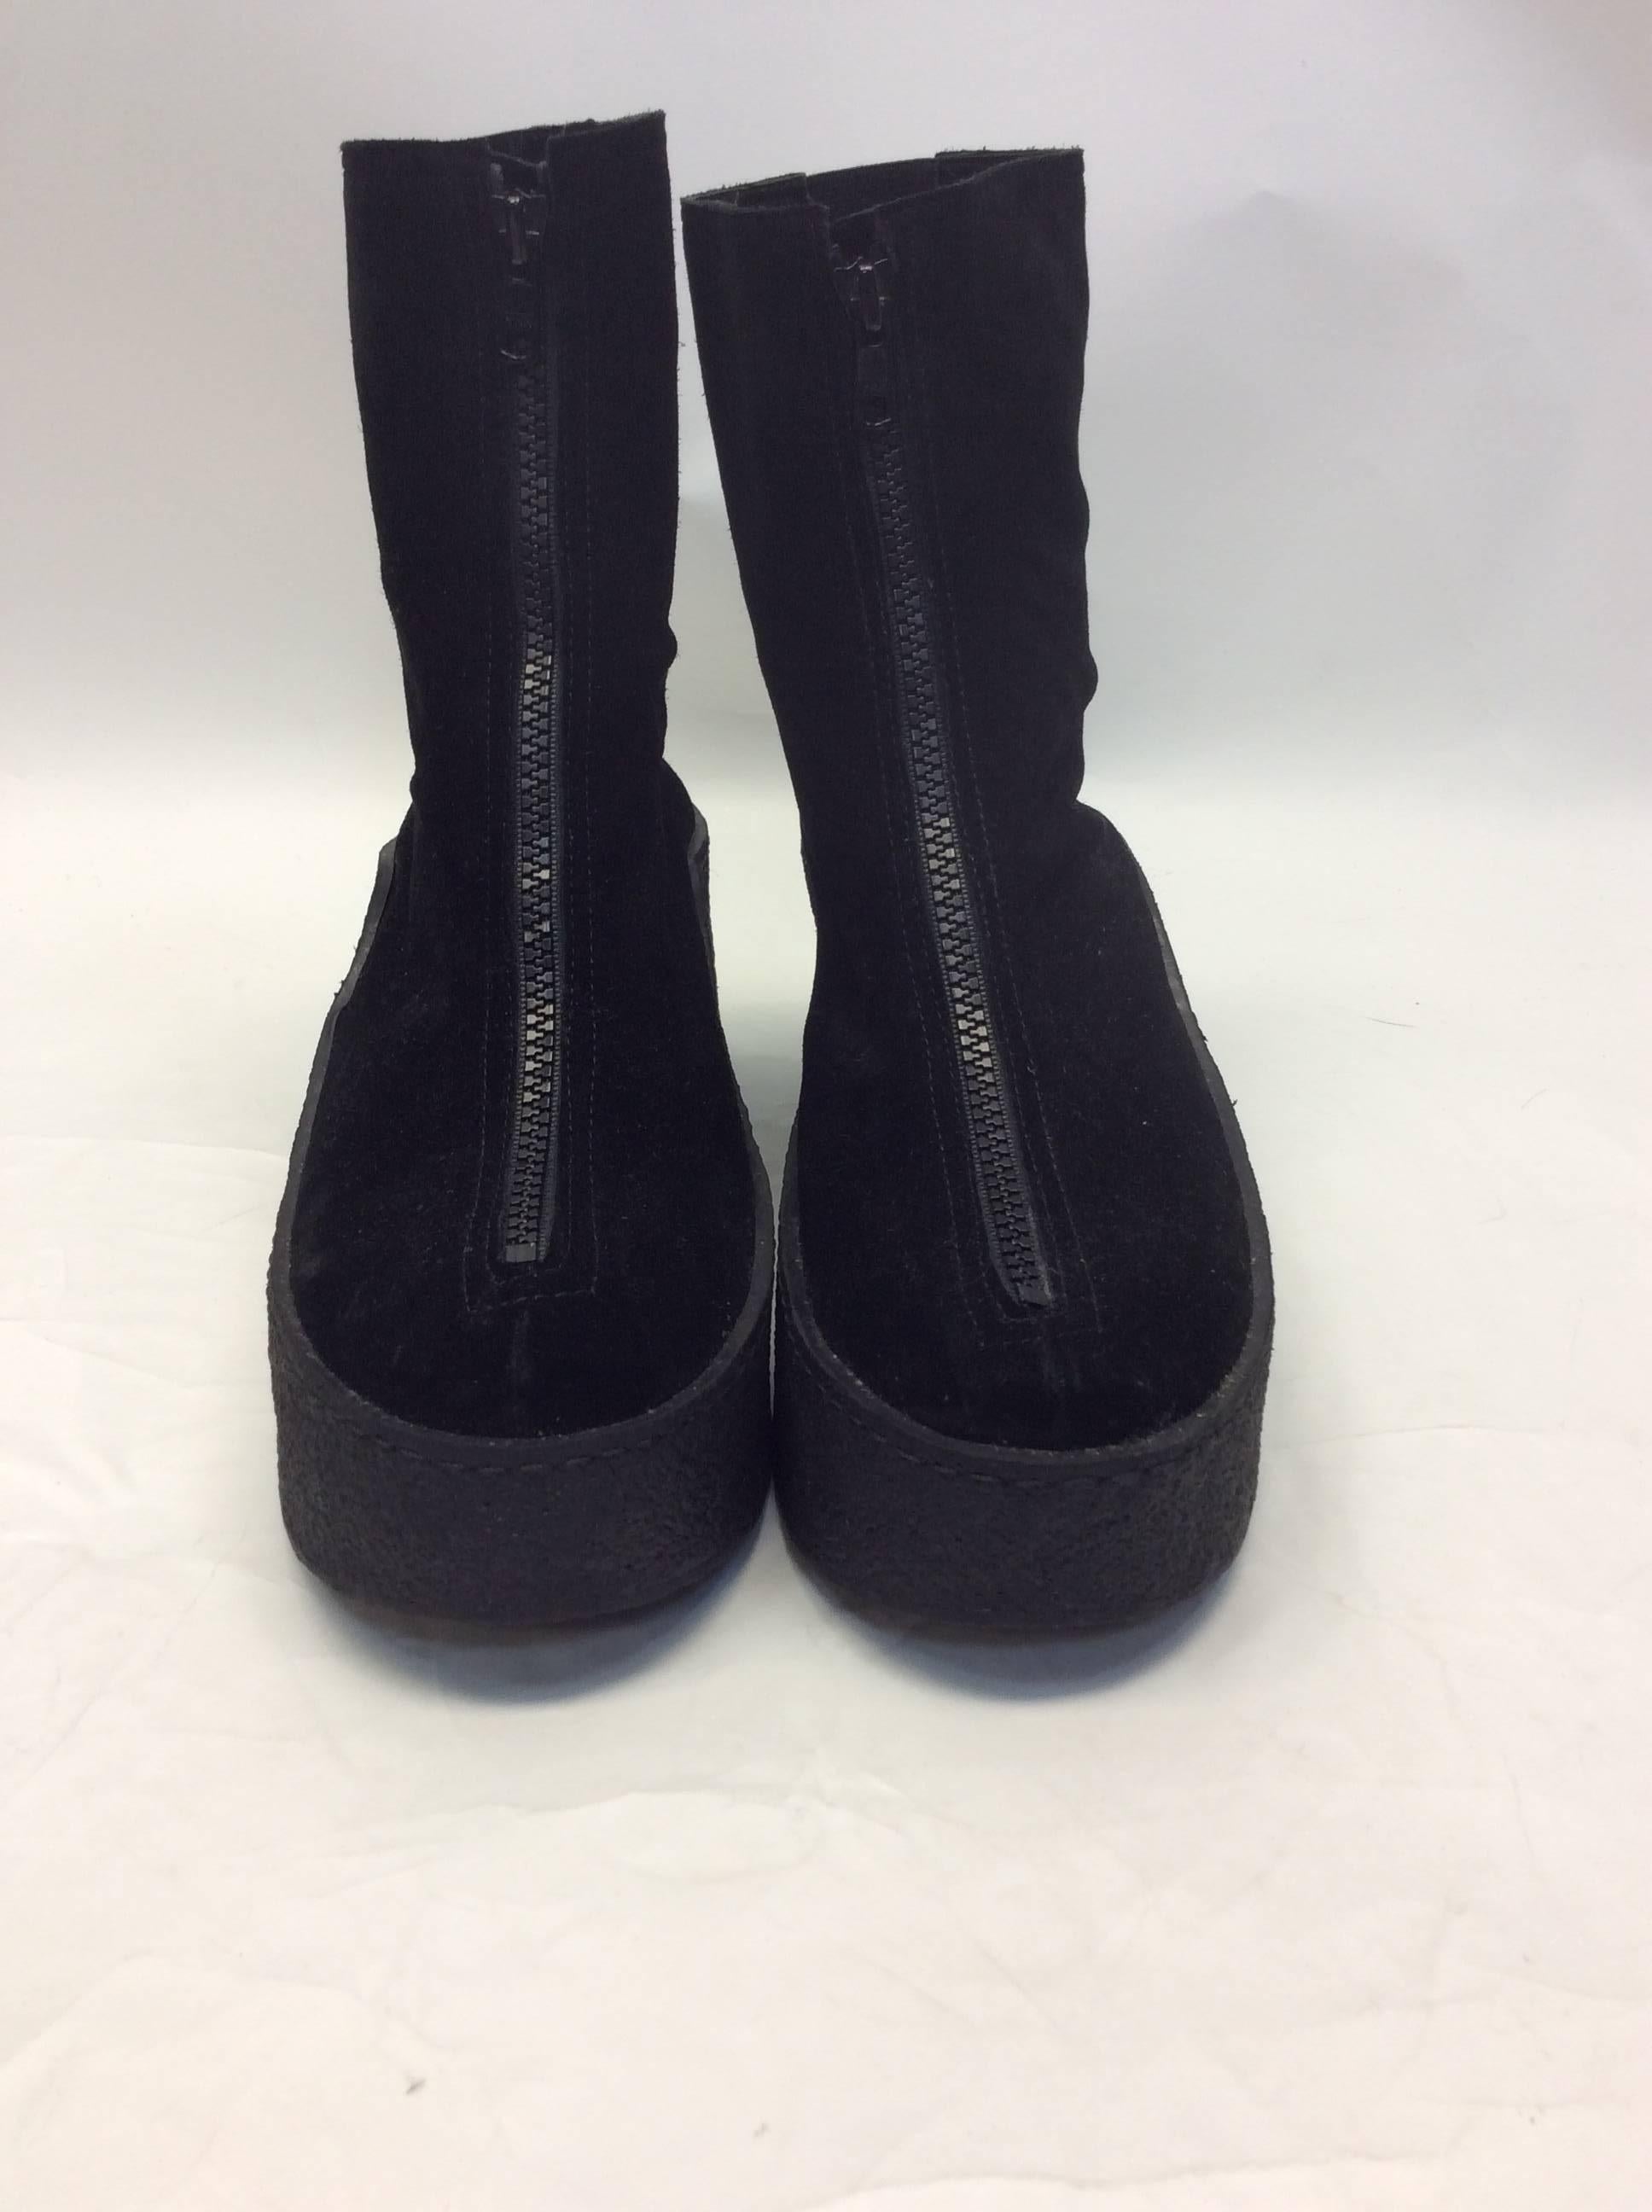 Robert Clergie Platform Suede Zip Ankle Boots
Size 10.5
$199
3 inch heel, 2 inch platform
Suede
